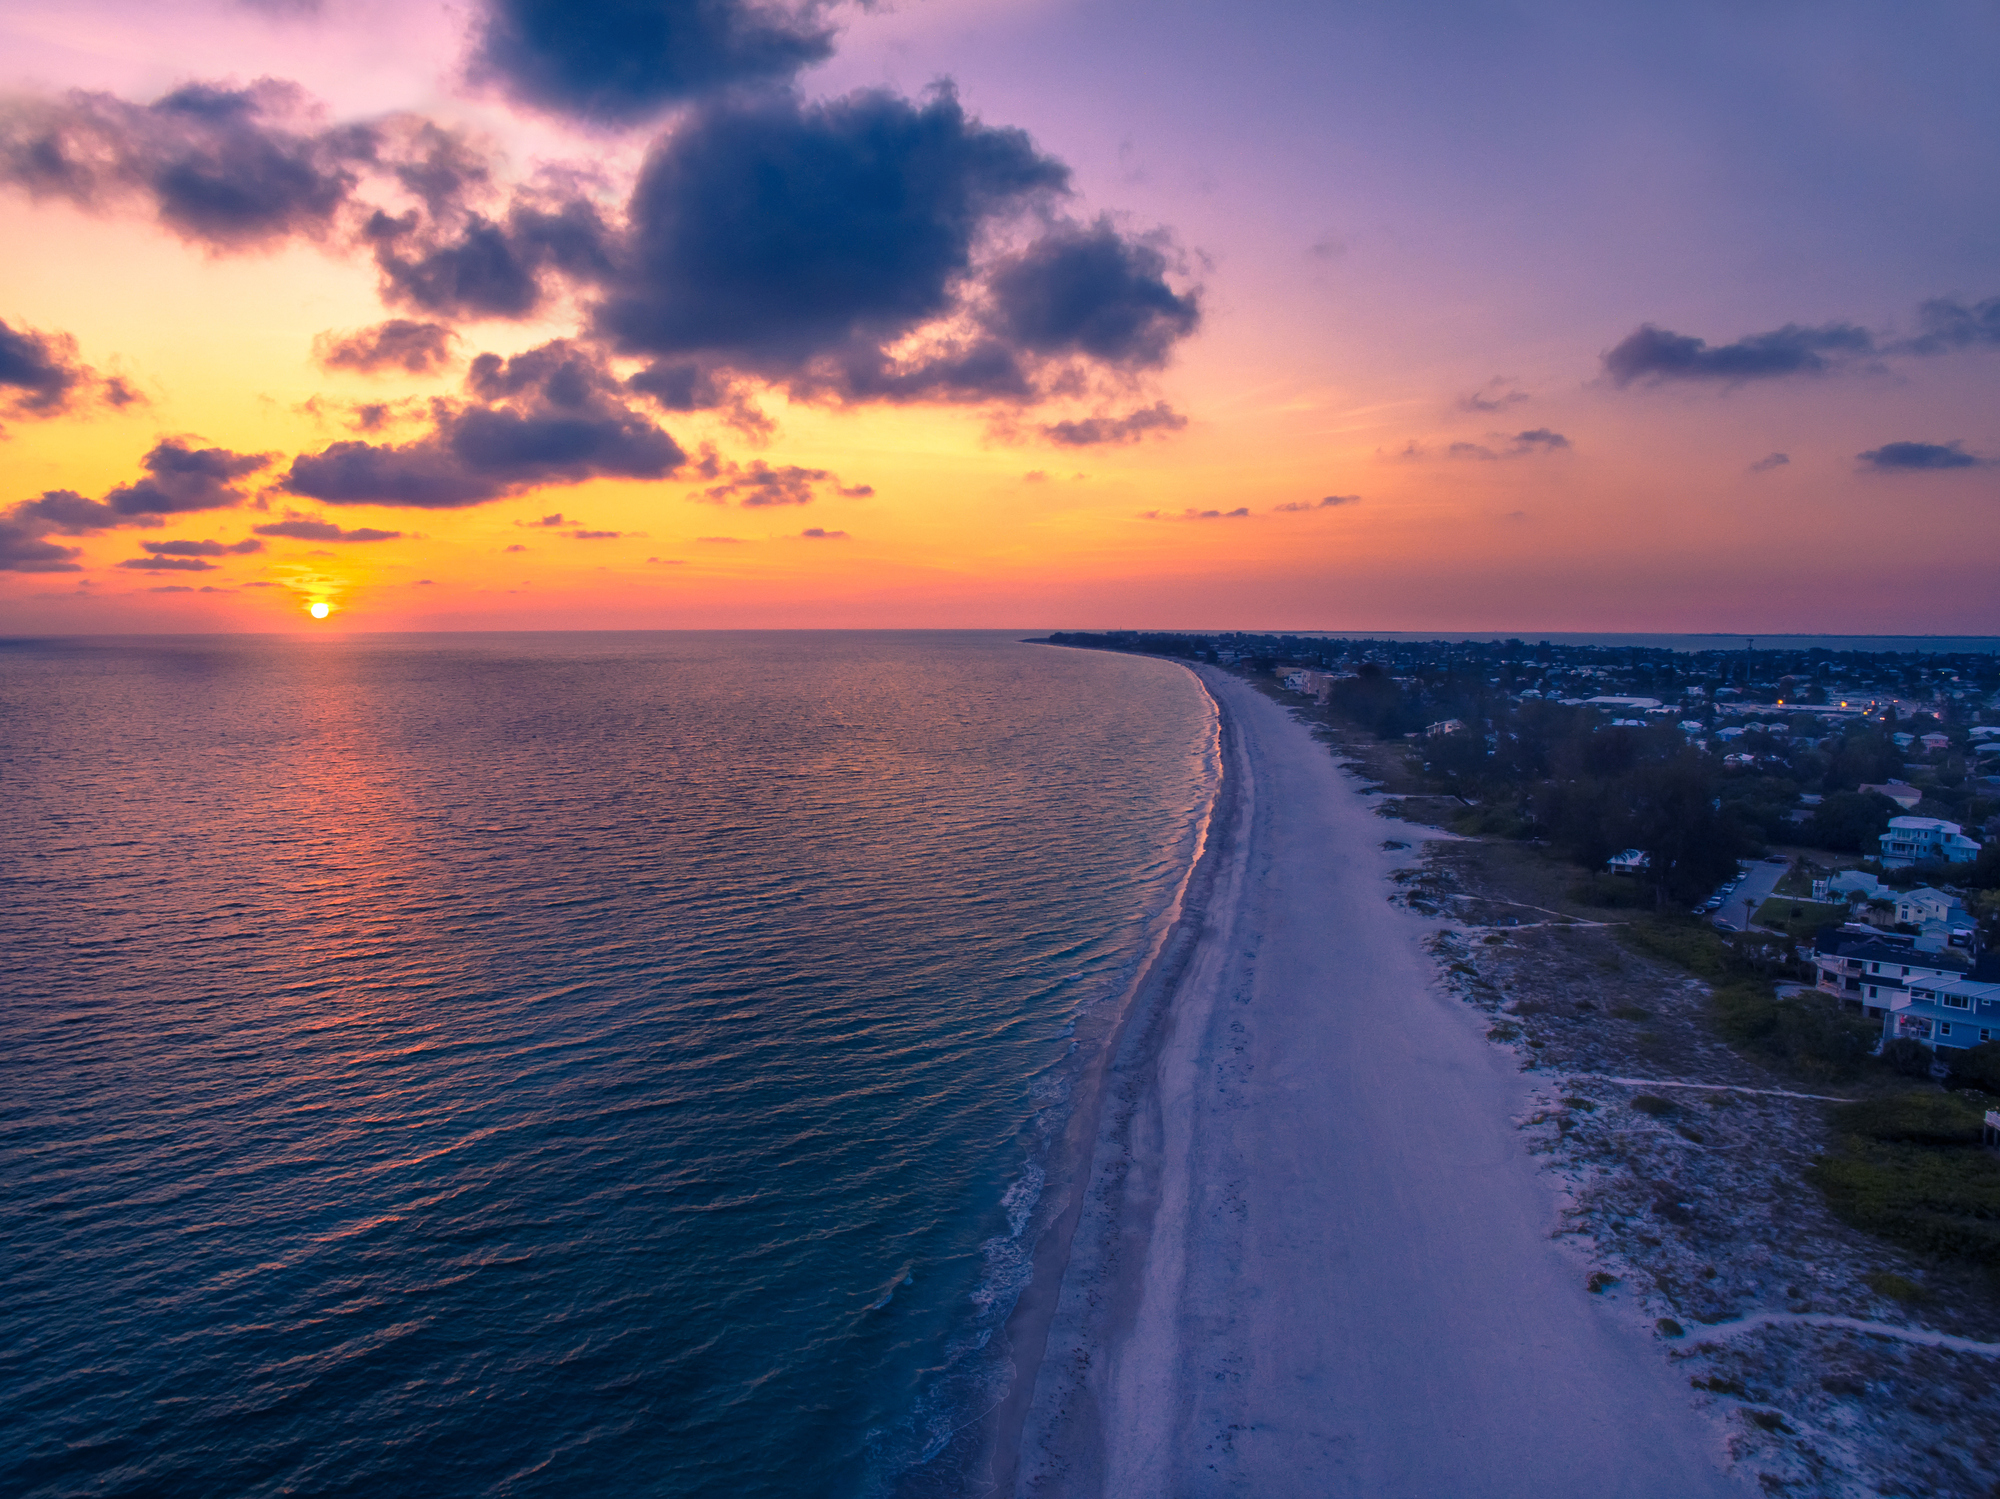 Beautiful sunset at Anna Maria Island, Florida.